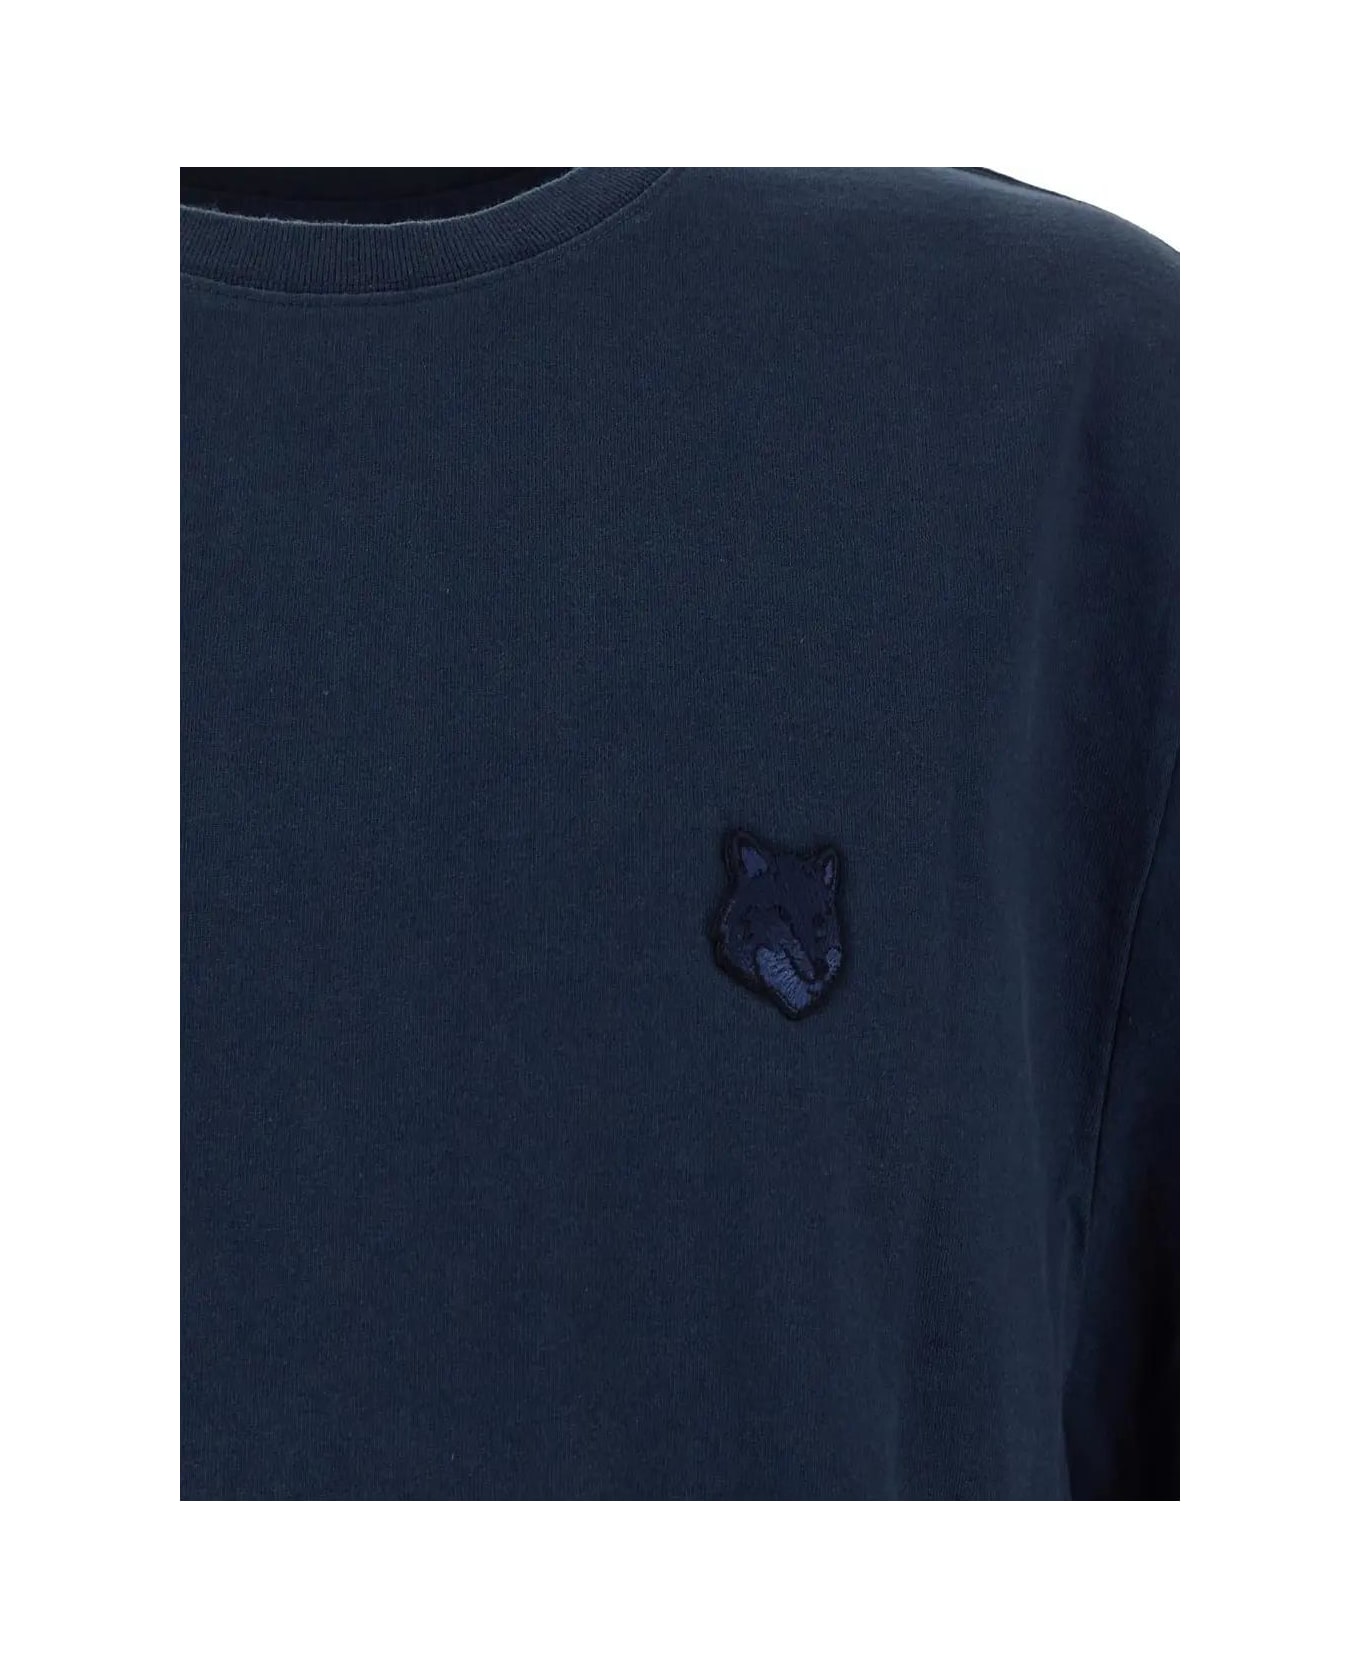 Maison Kitsuné Cotton T-shirt - Blue